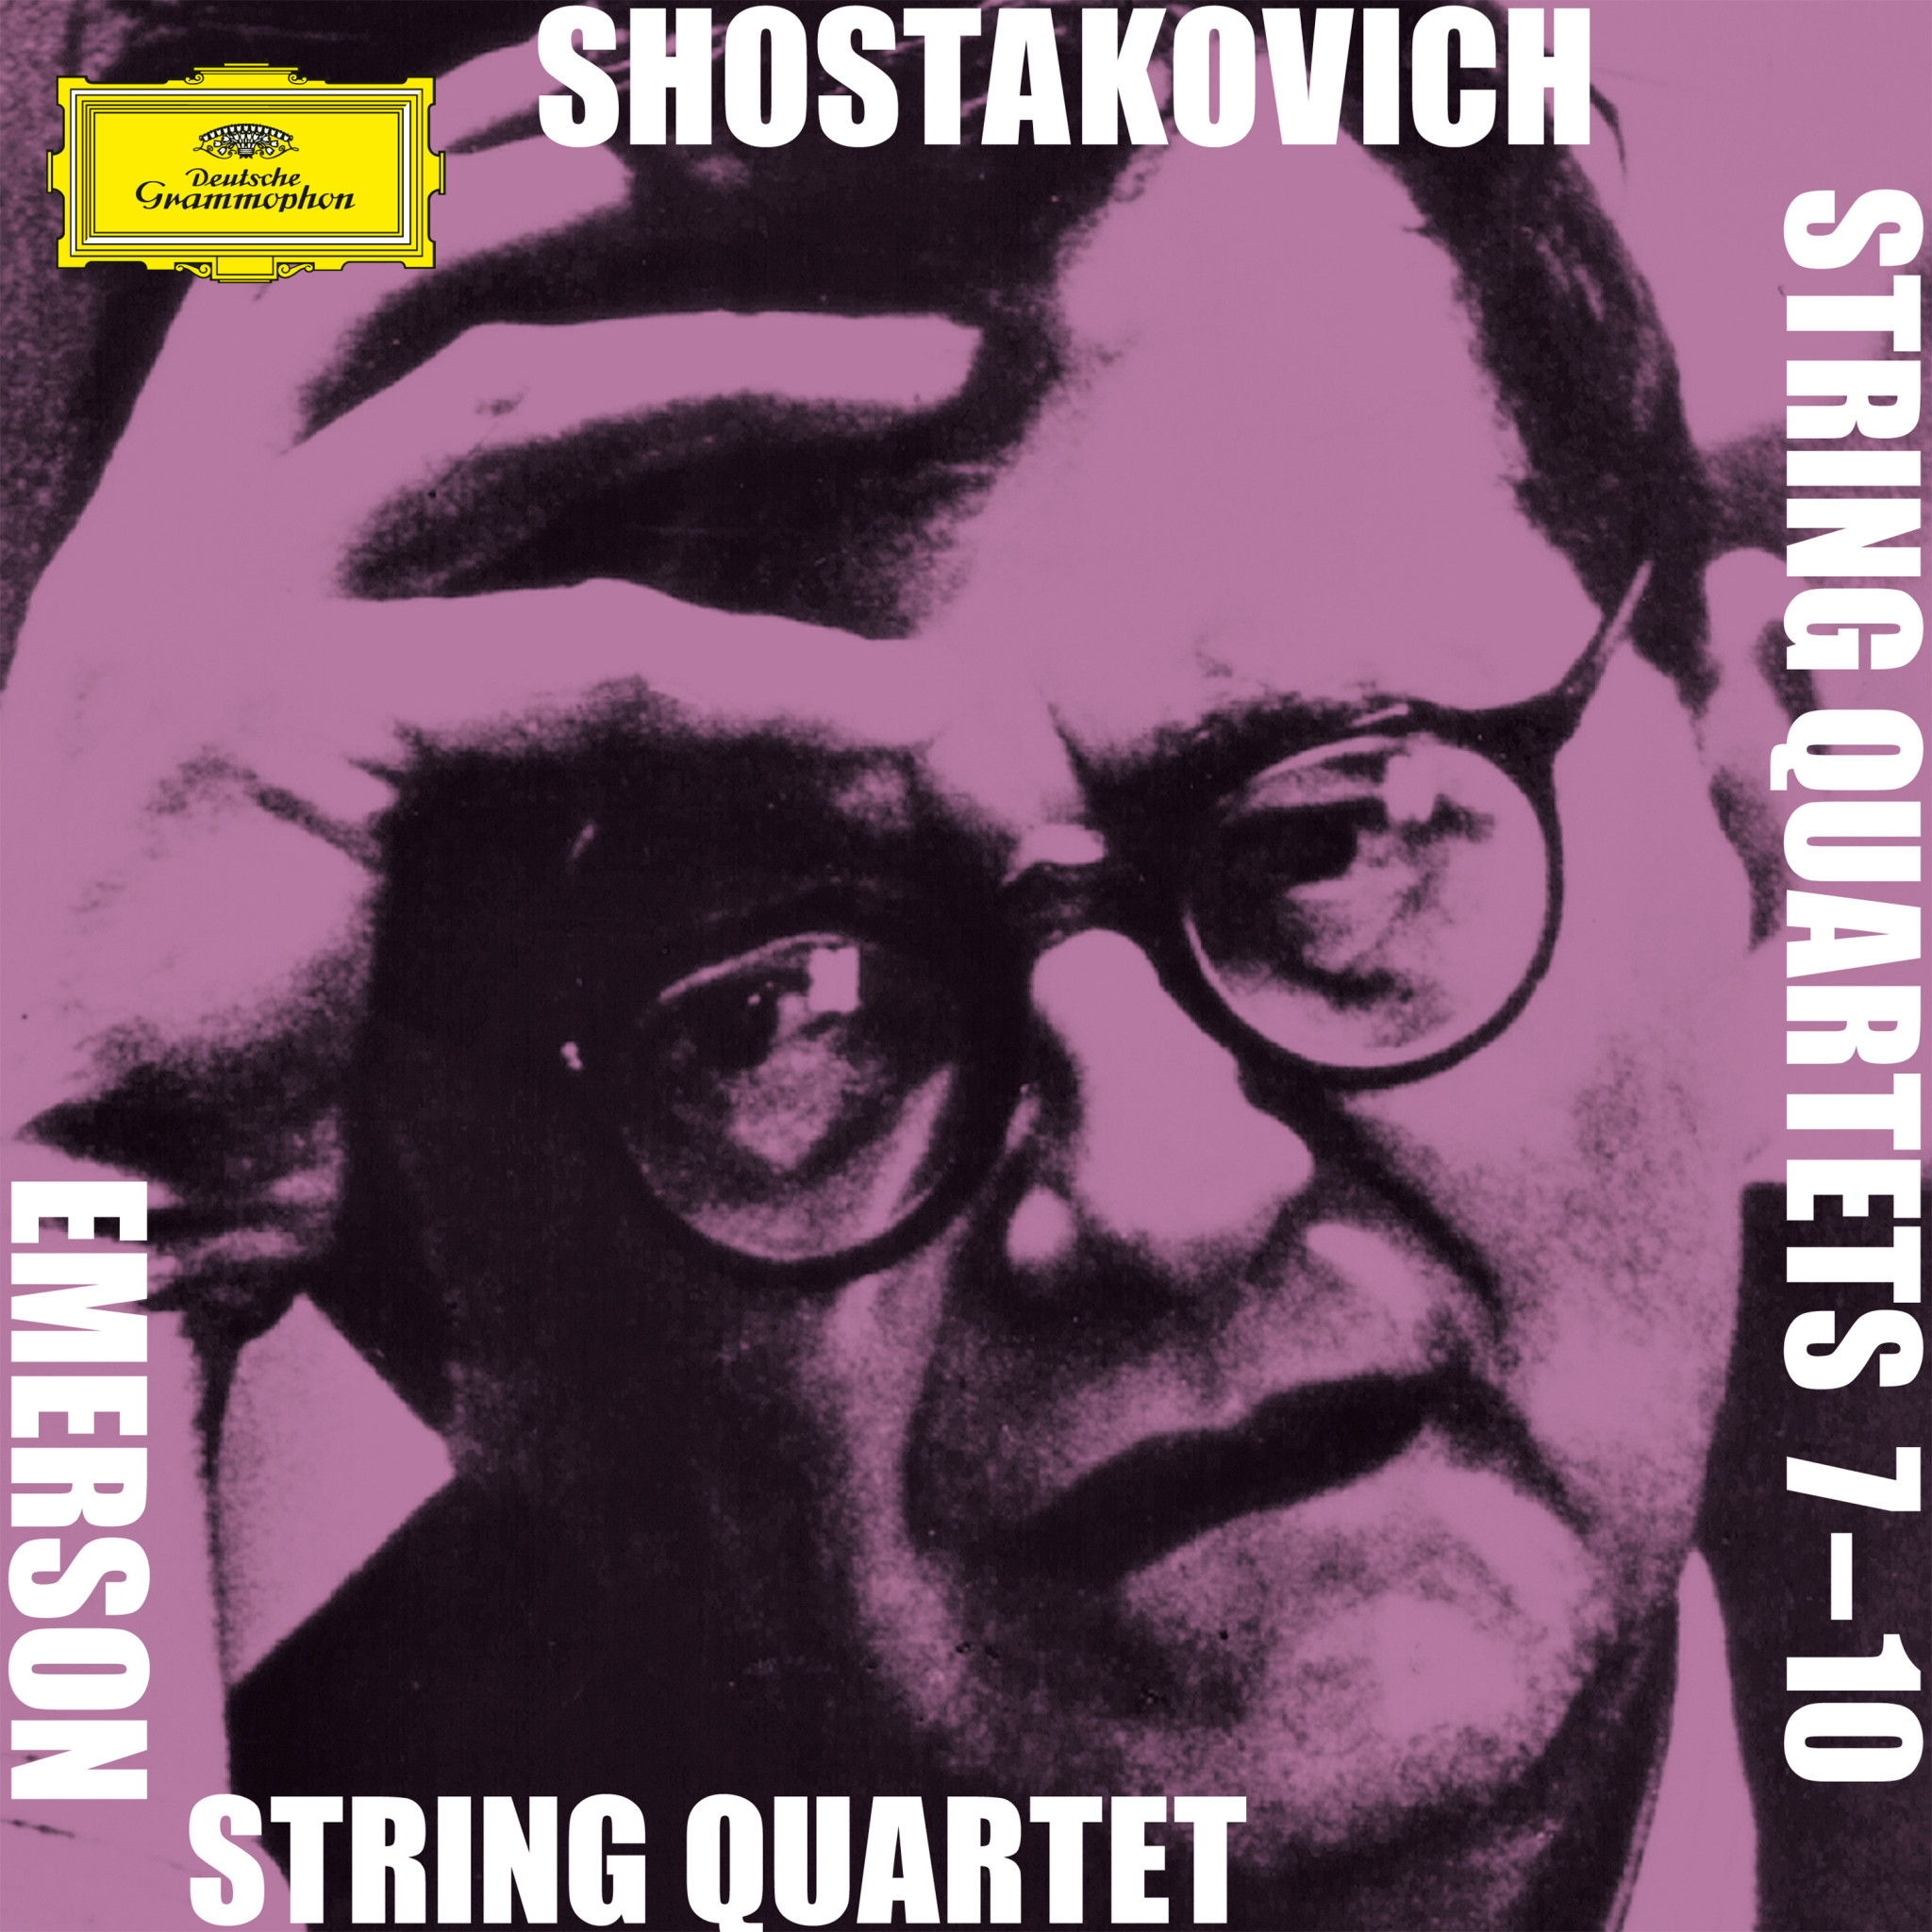 Emerson String Quartet. Schostakovich String Quartets 7-10